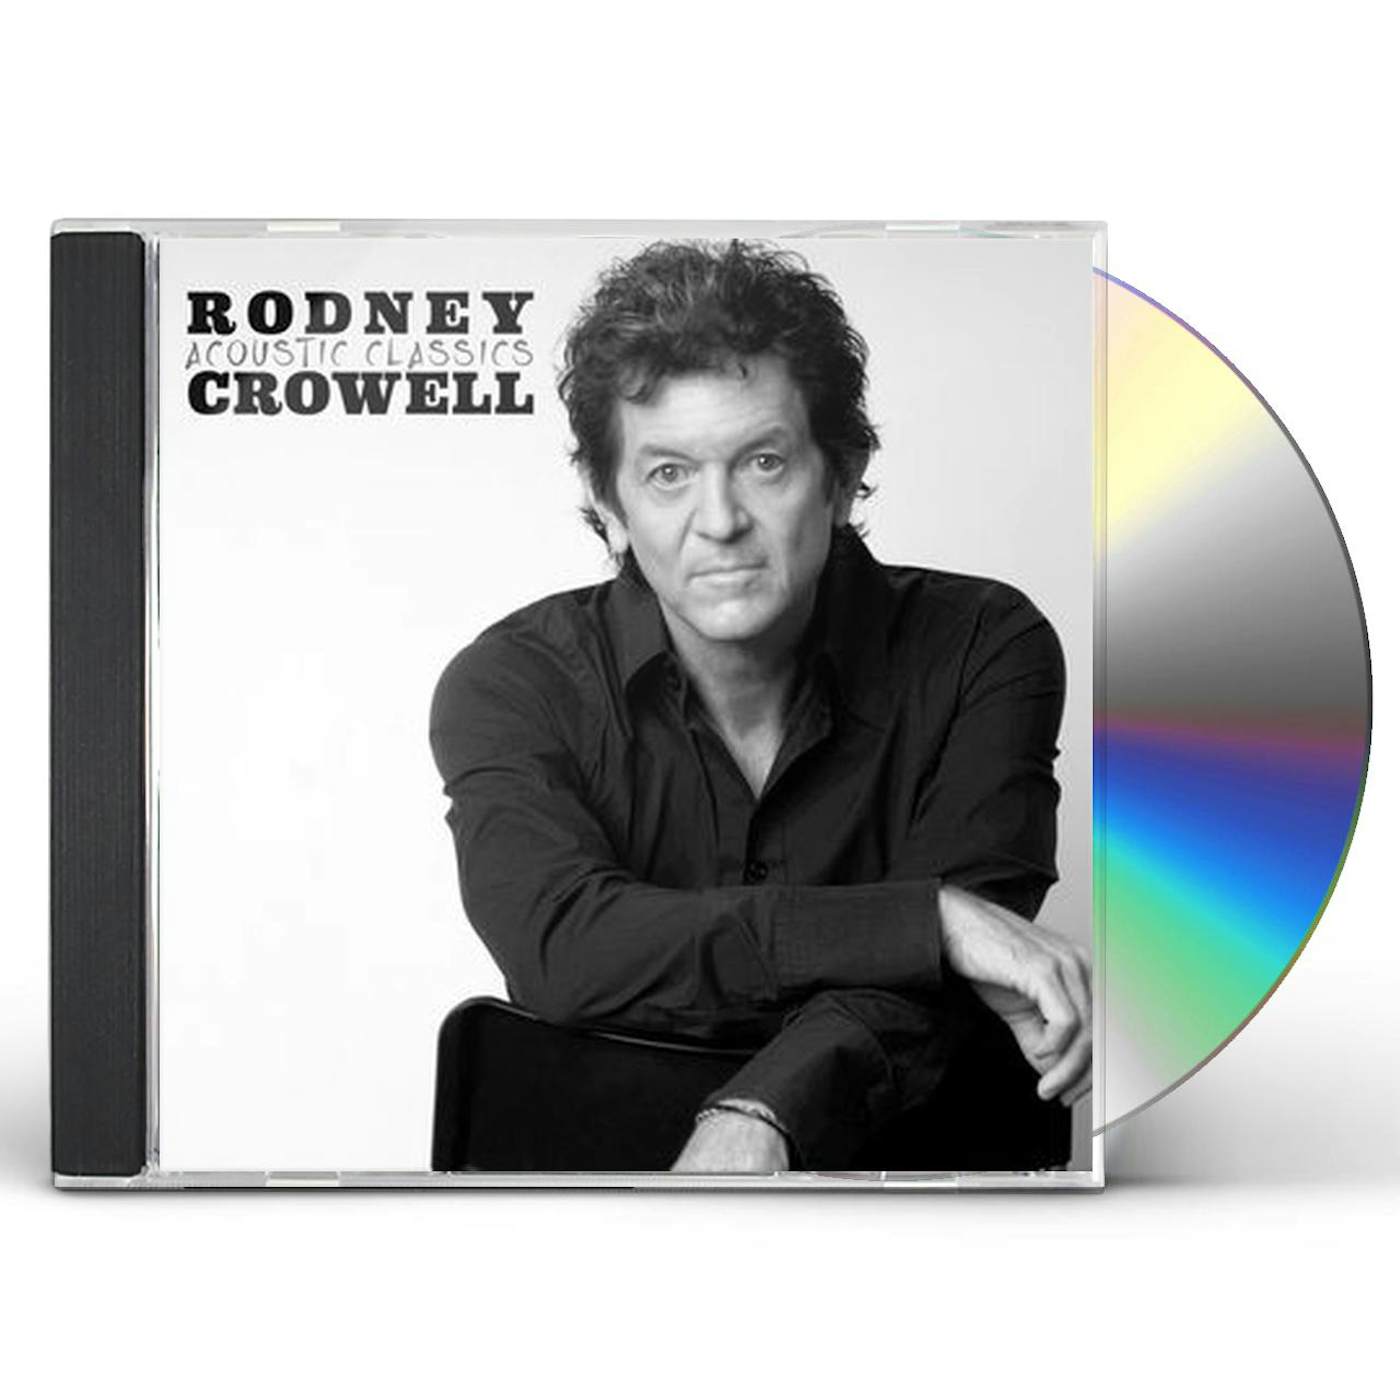 Rodney Crowell ACOUSTIC CLASSICS CD